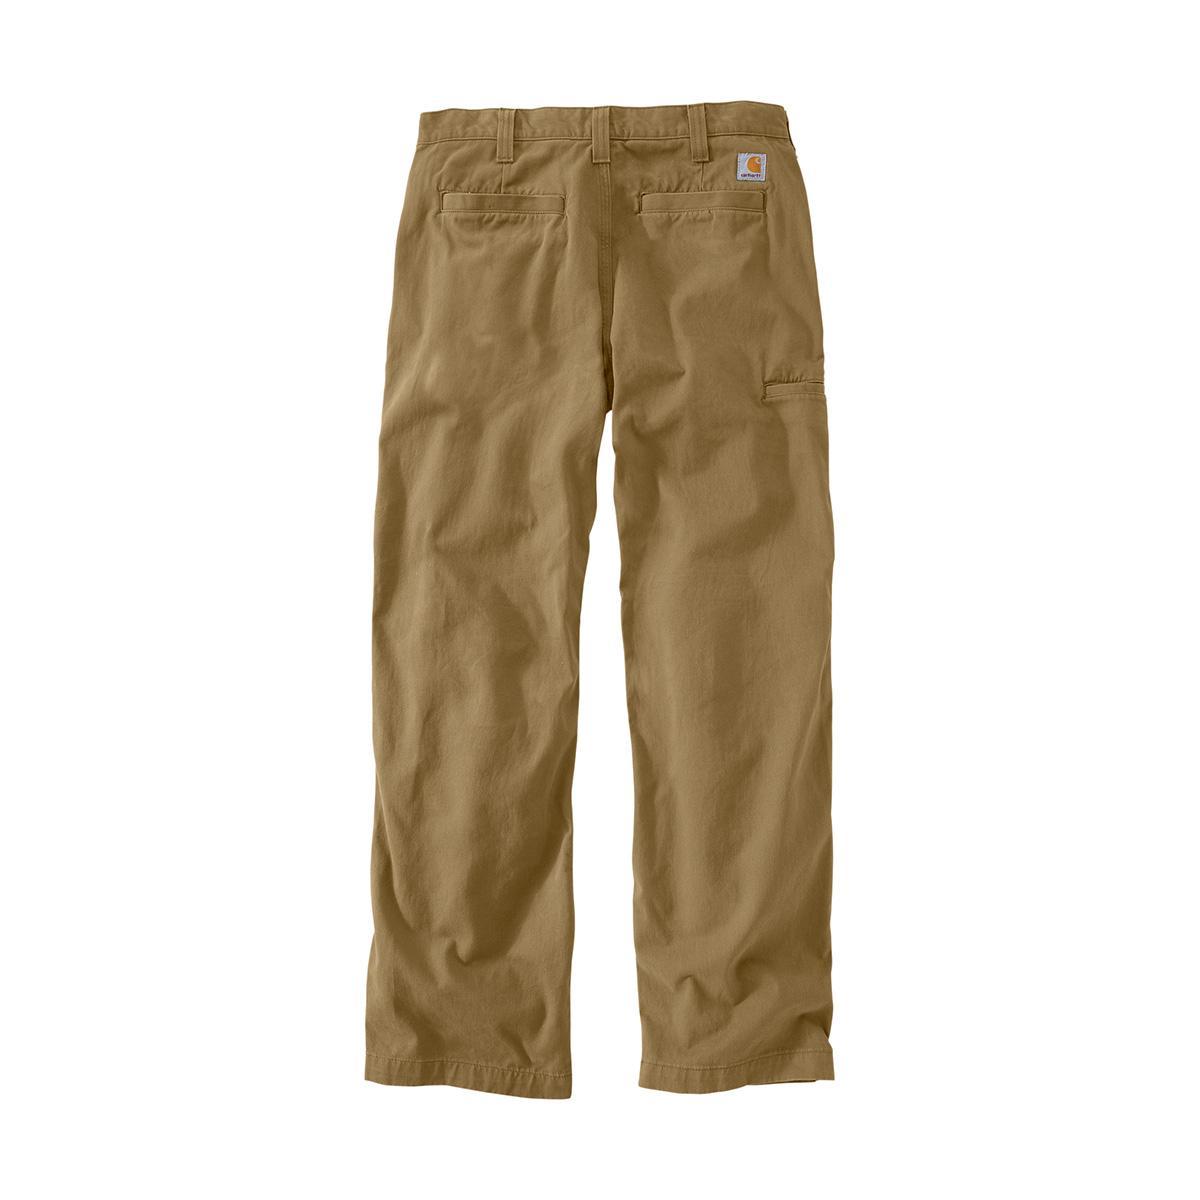 Mast General Store | Men's Rugged Khaki Pants